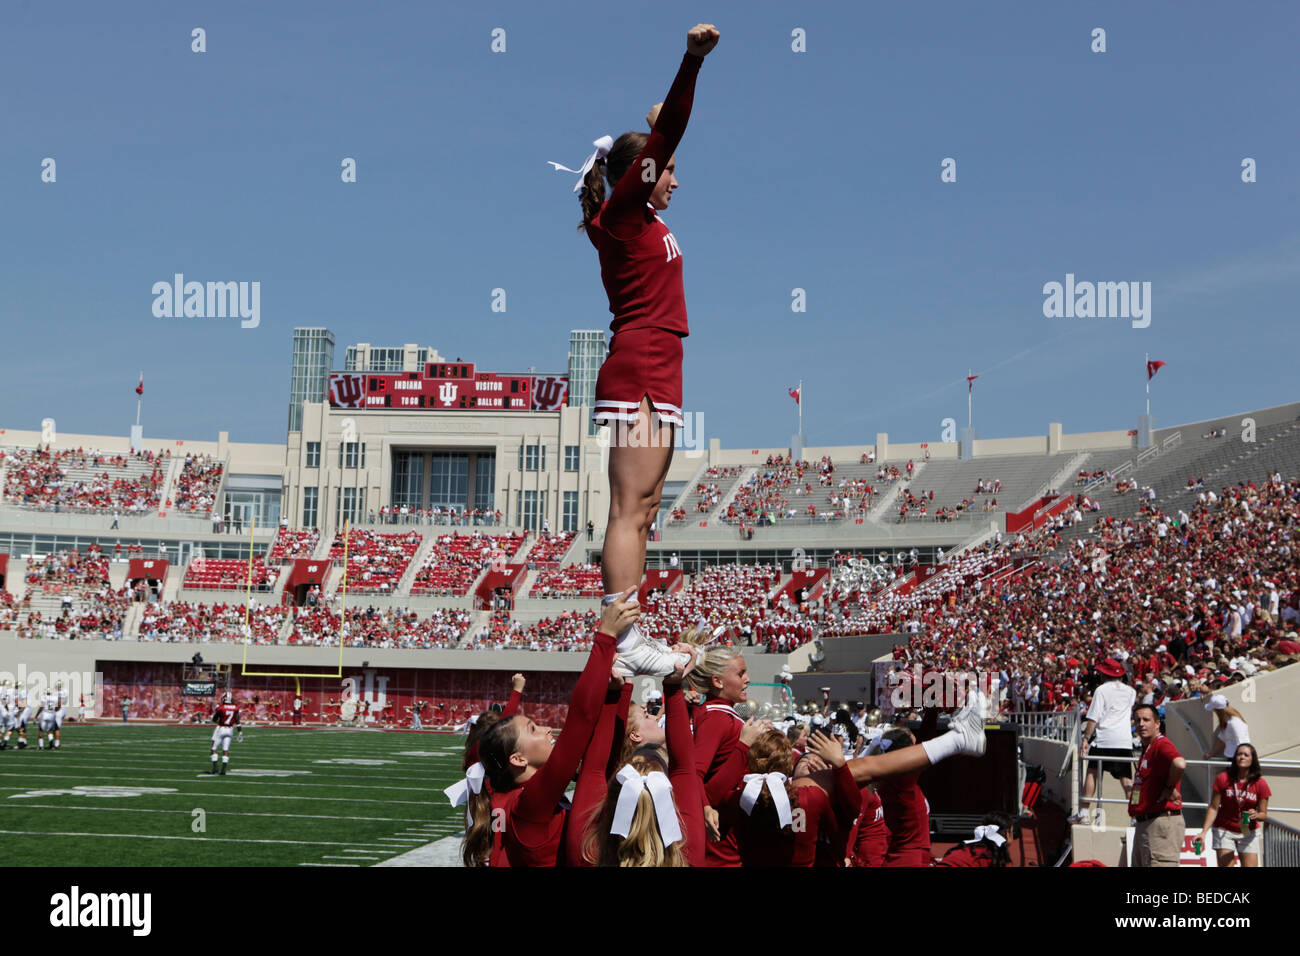 IU cheerleaders during an Indiana University football game. Stock Photo